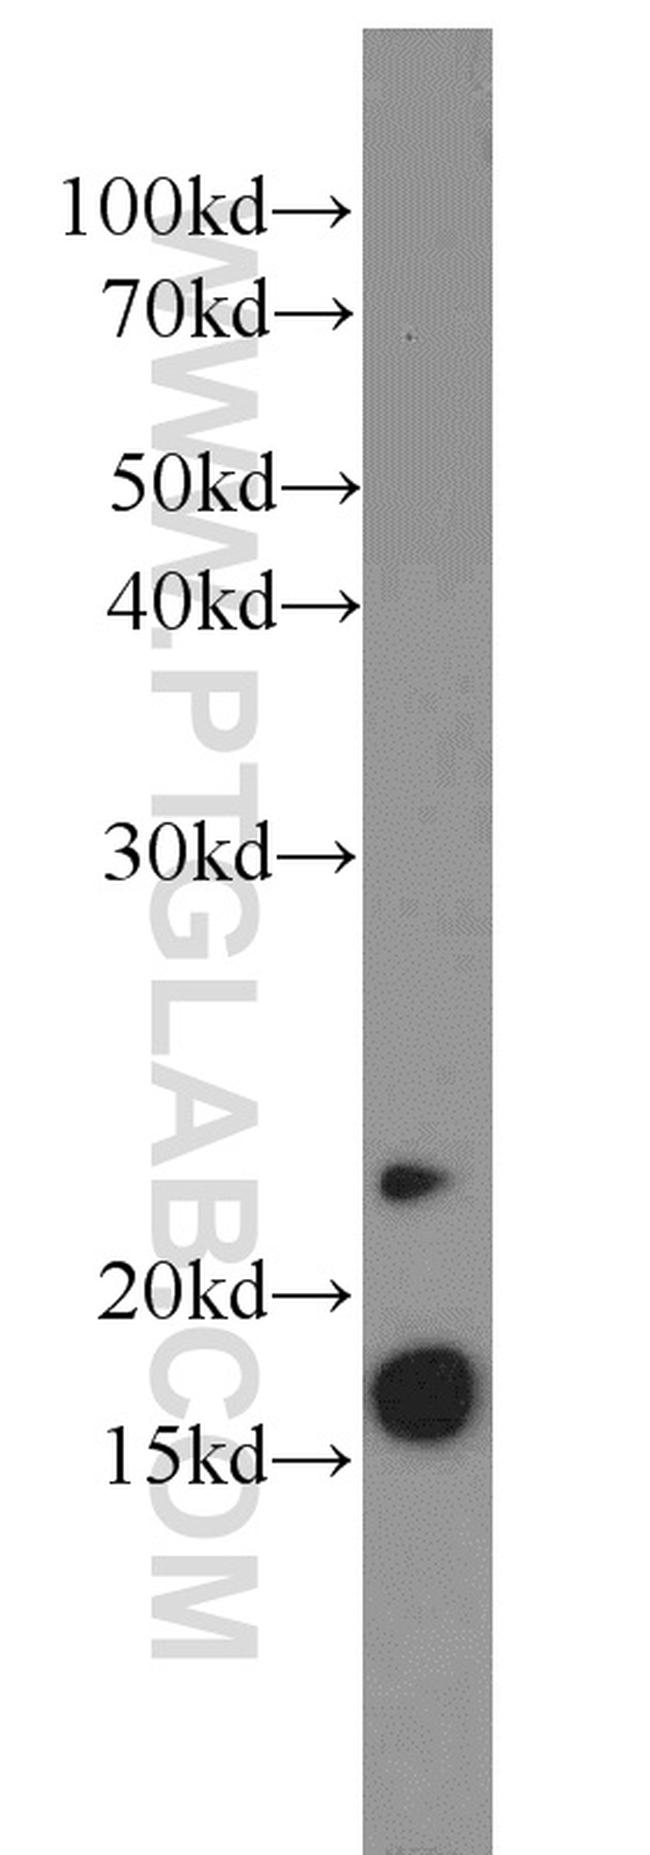 PRAP1 Antibody in Western Blot (WB)